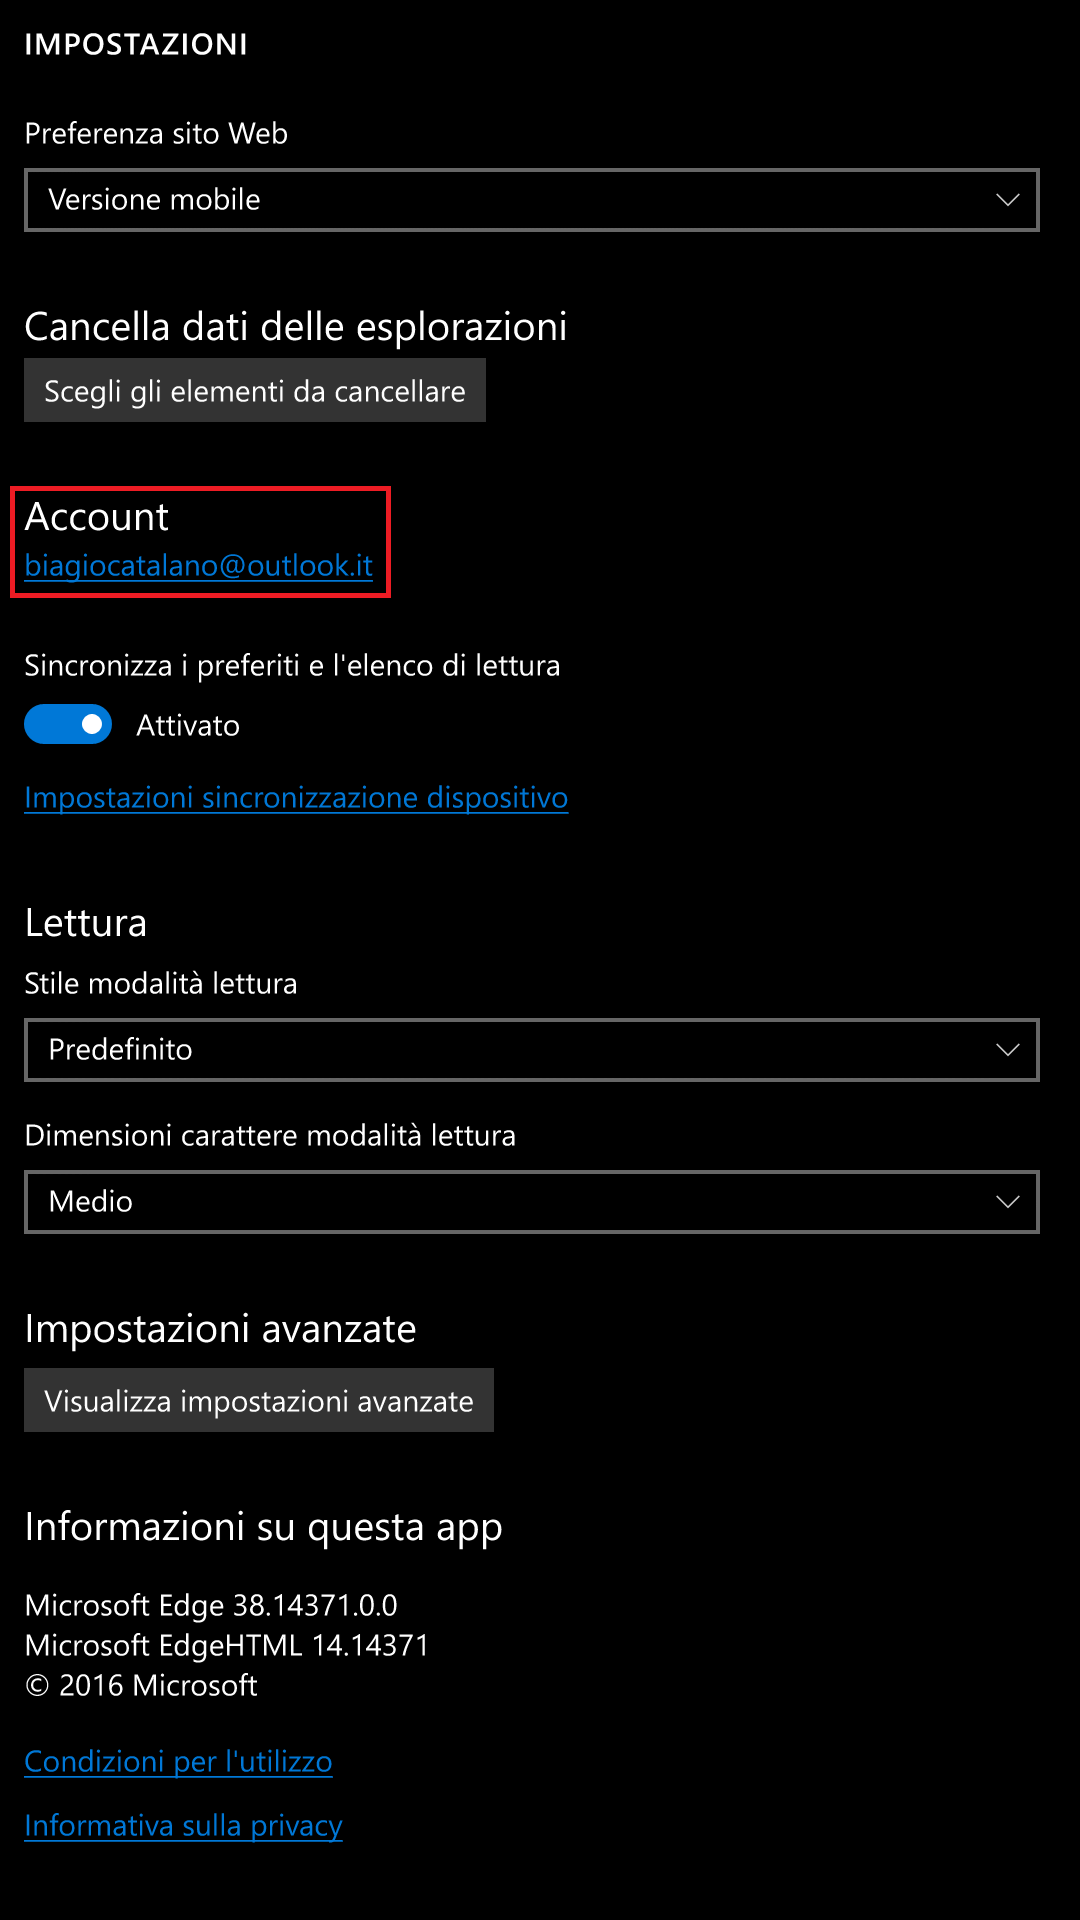 Microsoft Edge - Windows 10 Mobile - account